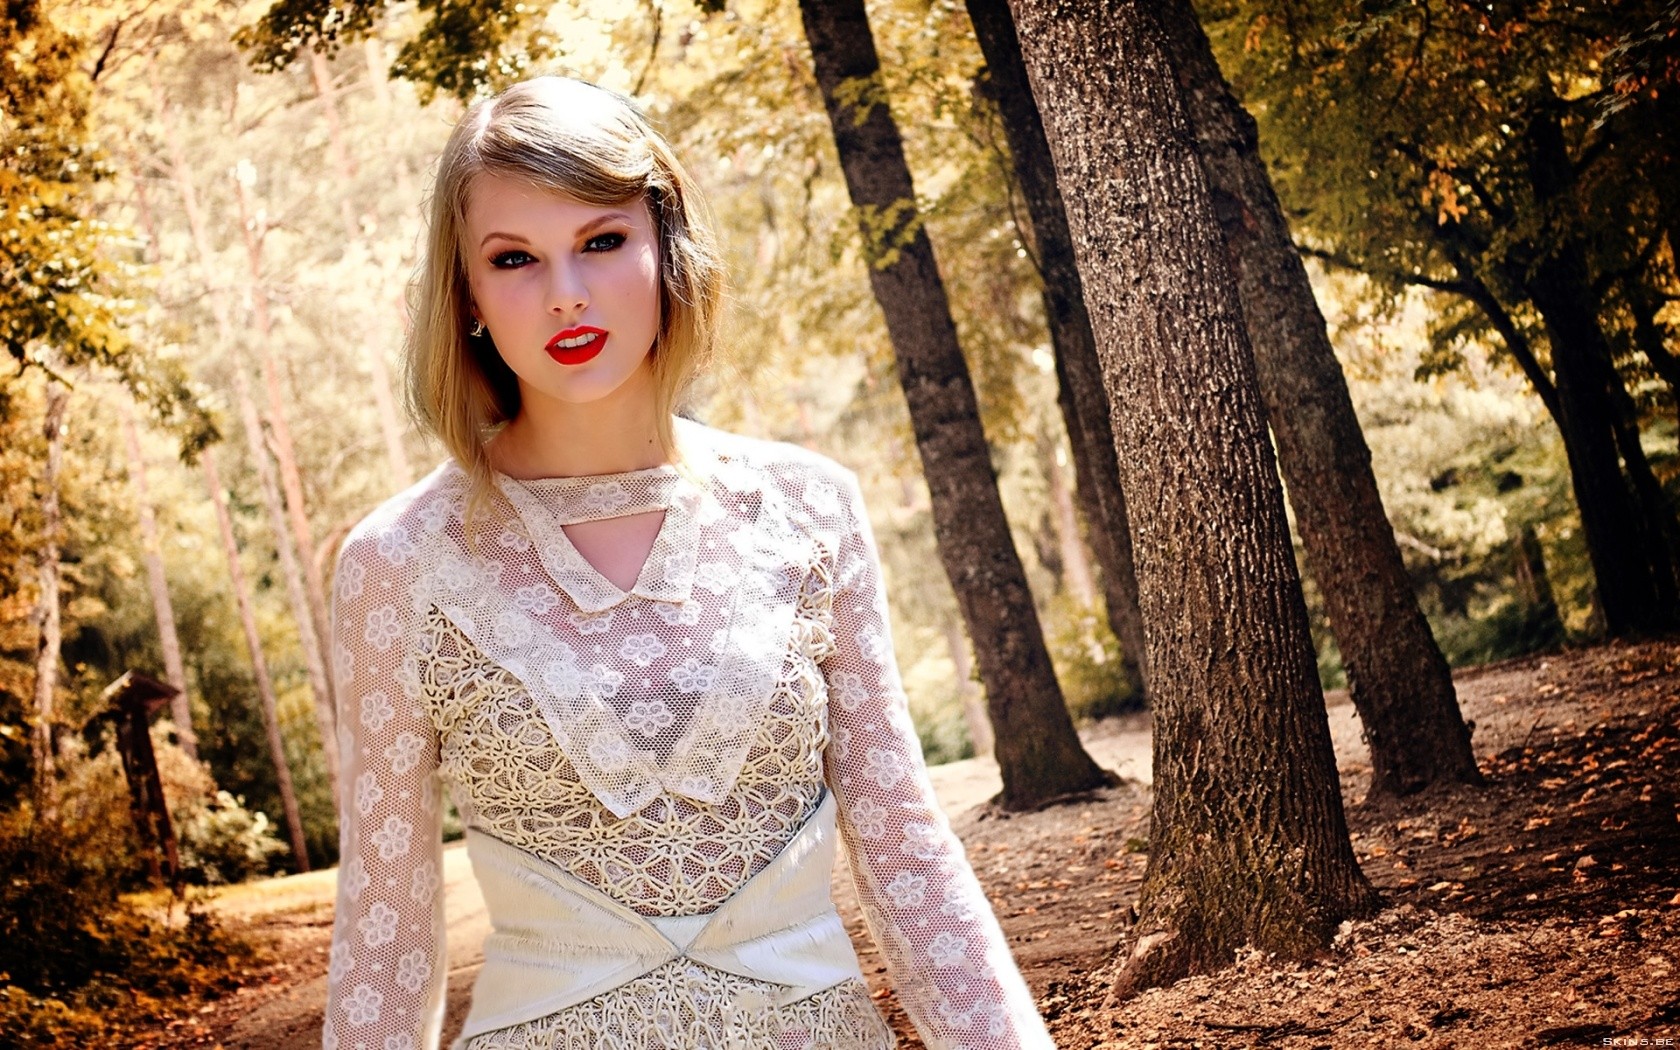 Taylor Swift 2013 HD Wallpapers